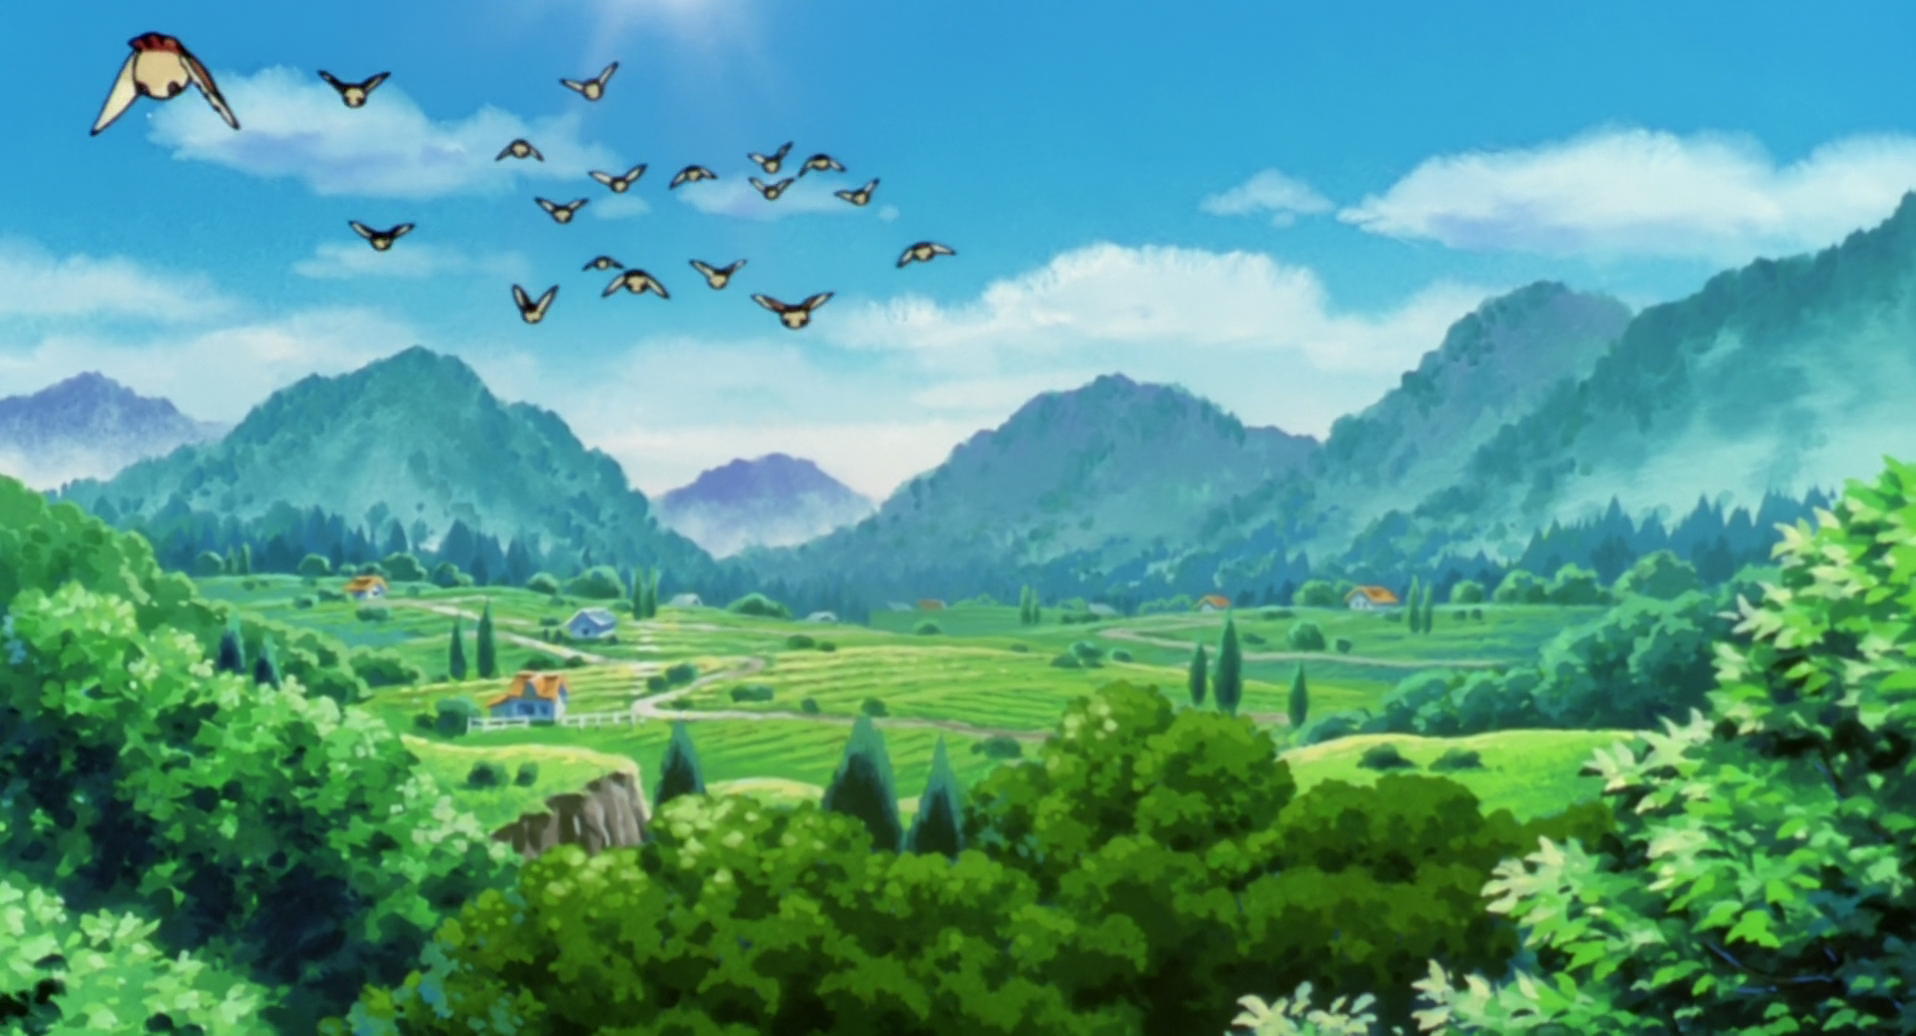 pokemon scenery wallpapers